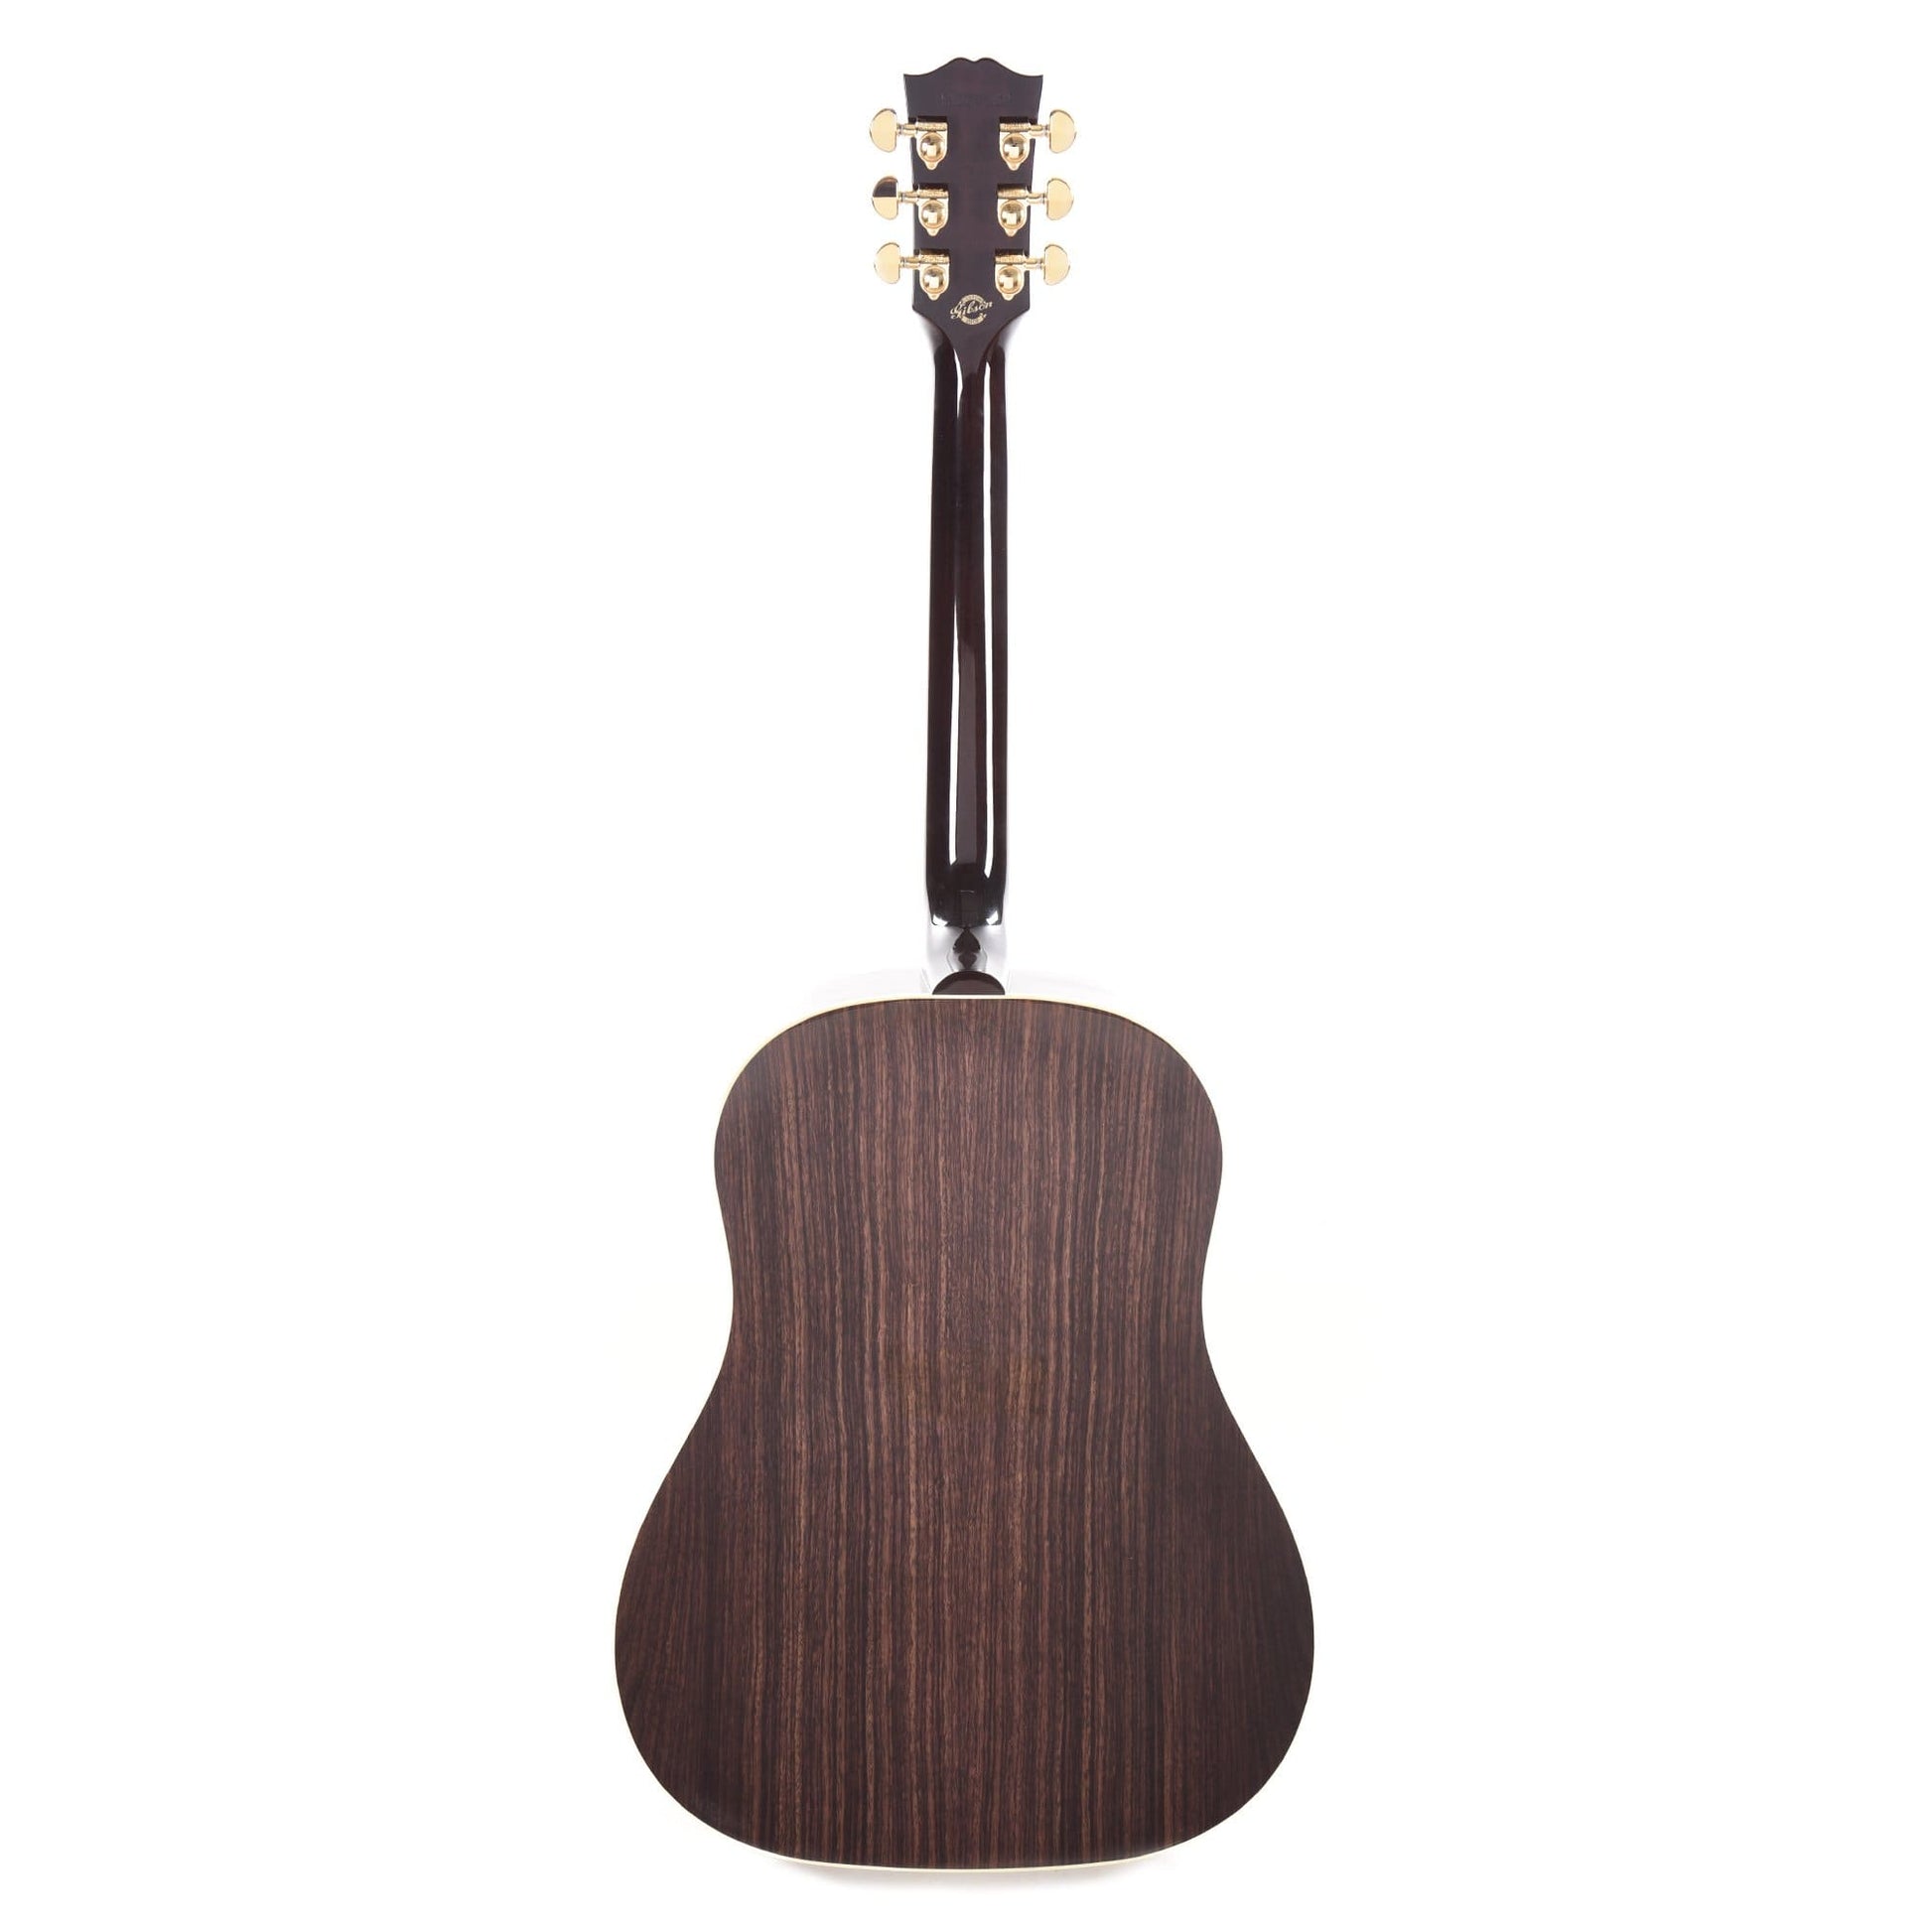 Gibson Montana J-45 Custom Vintage Sunburst Limited Edition w/Flower Peghead Inlay Acoustic Guitars / Dreadnought